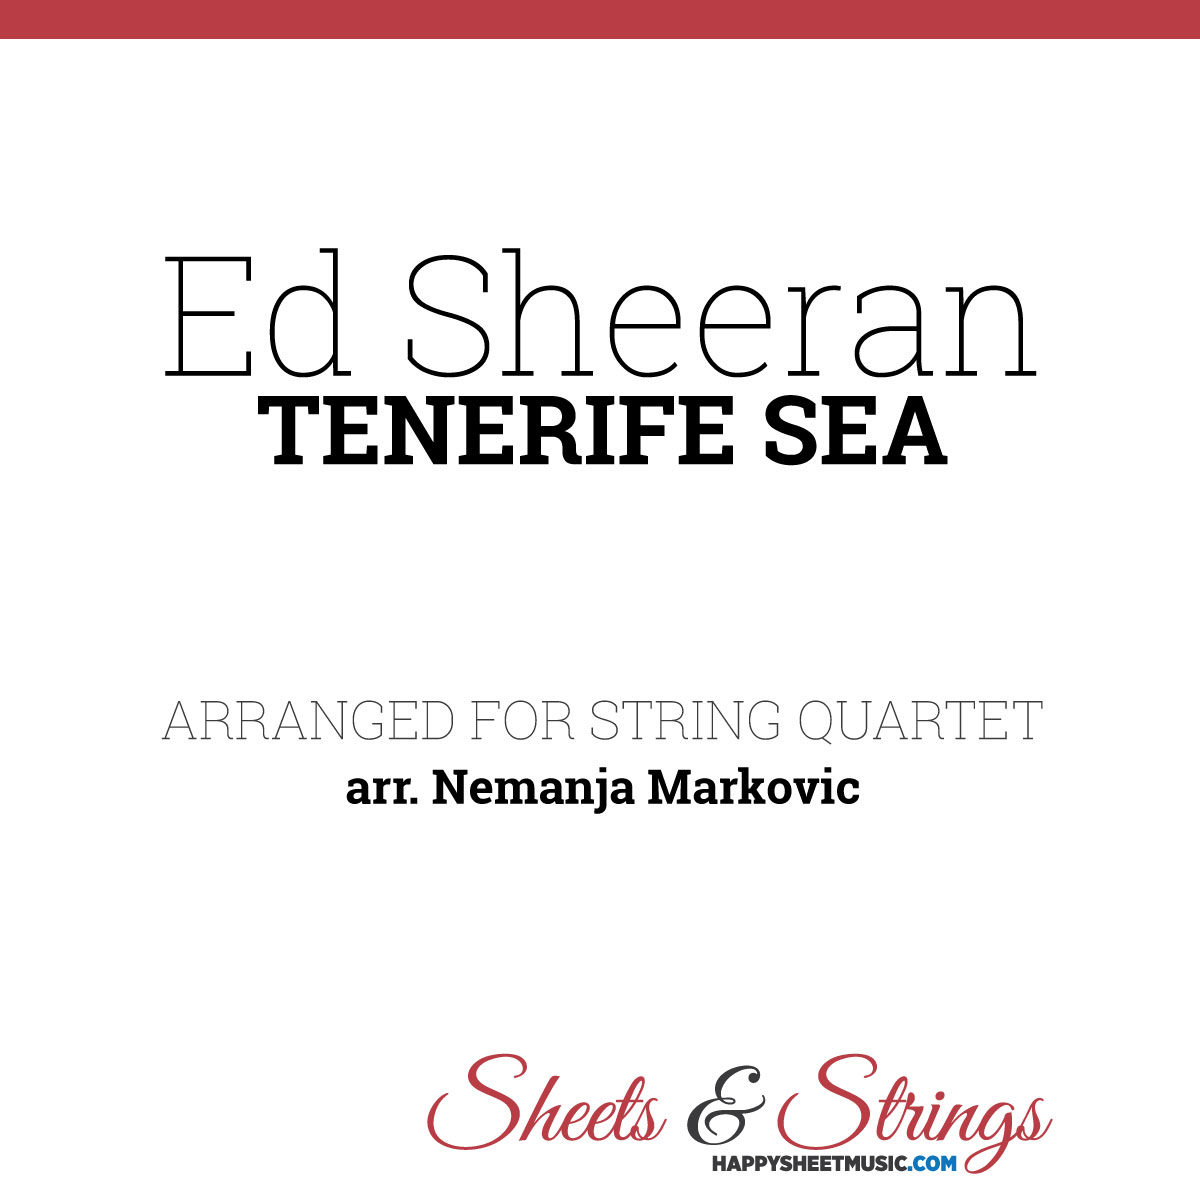 Ed Sheeran - Tenerife Sea - Sheet Music for String Quartet - Music Arrangement for String Quartet